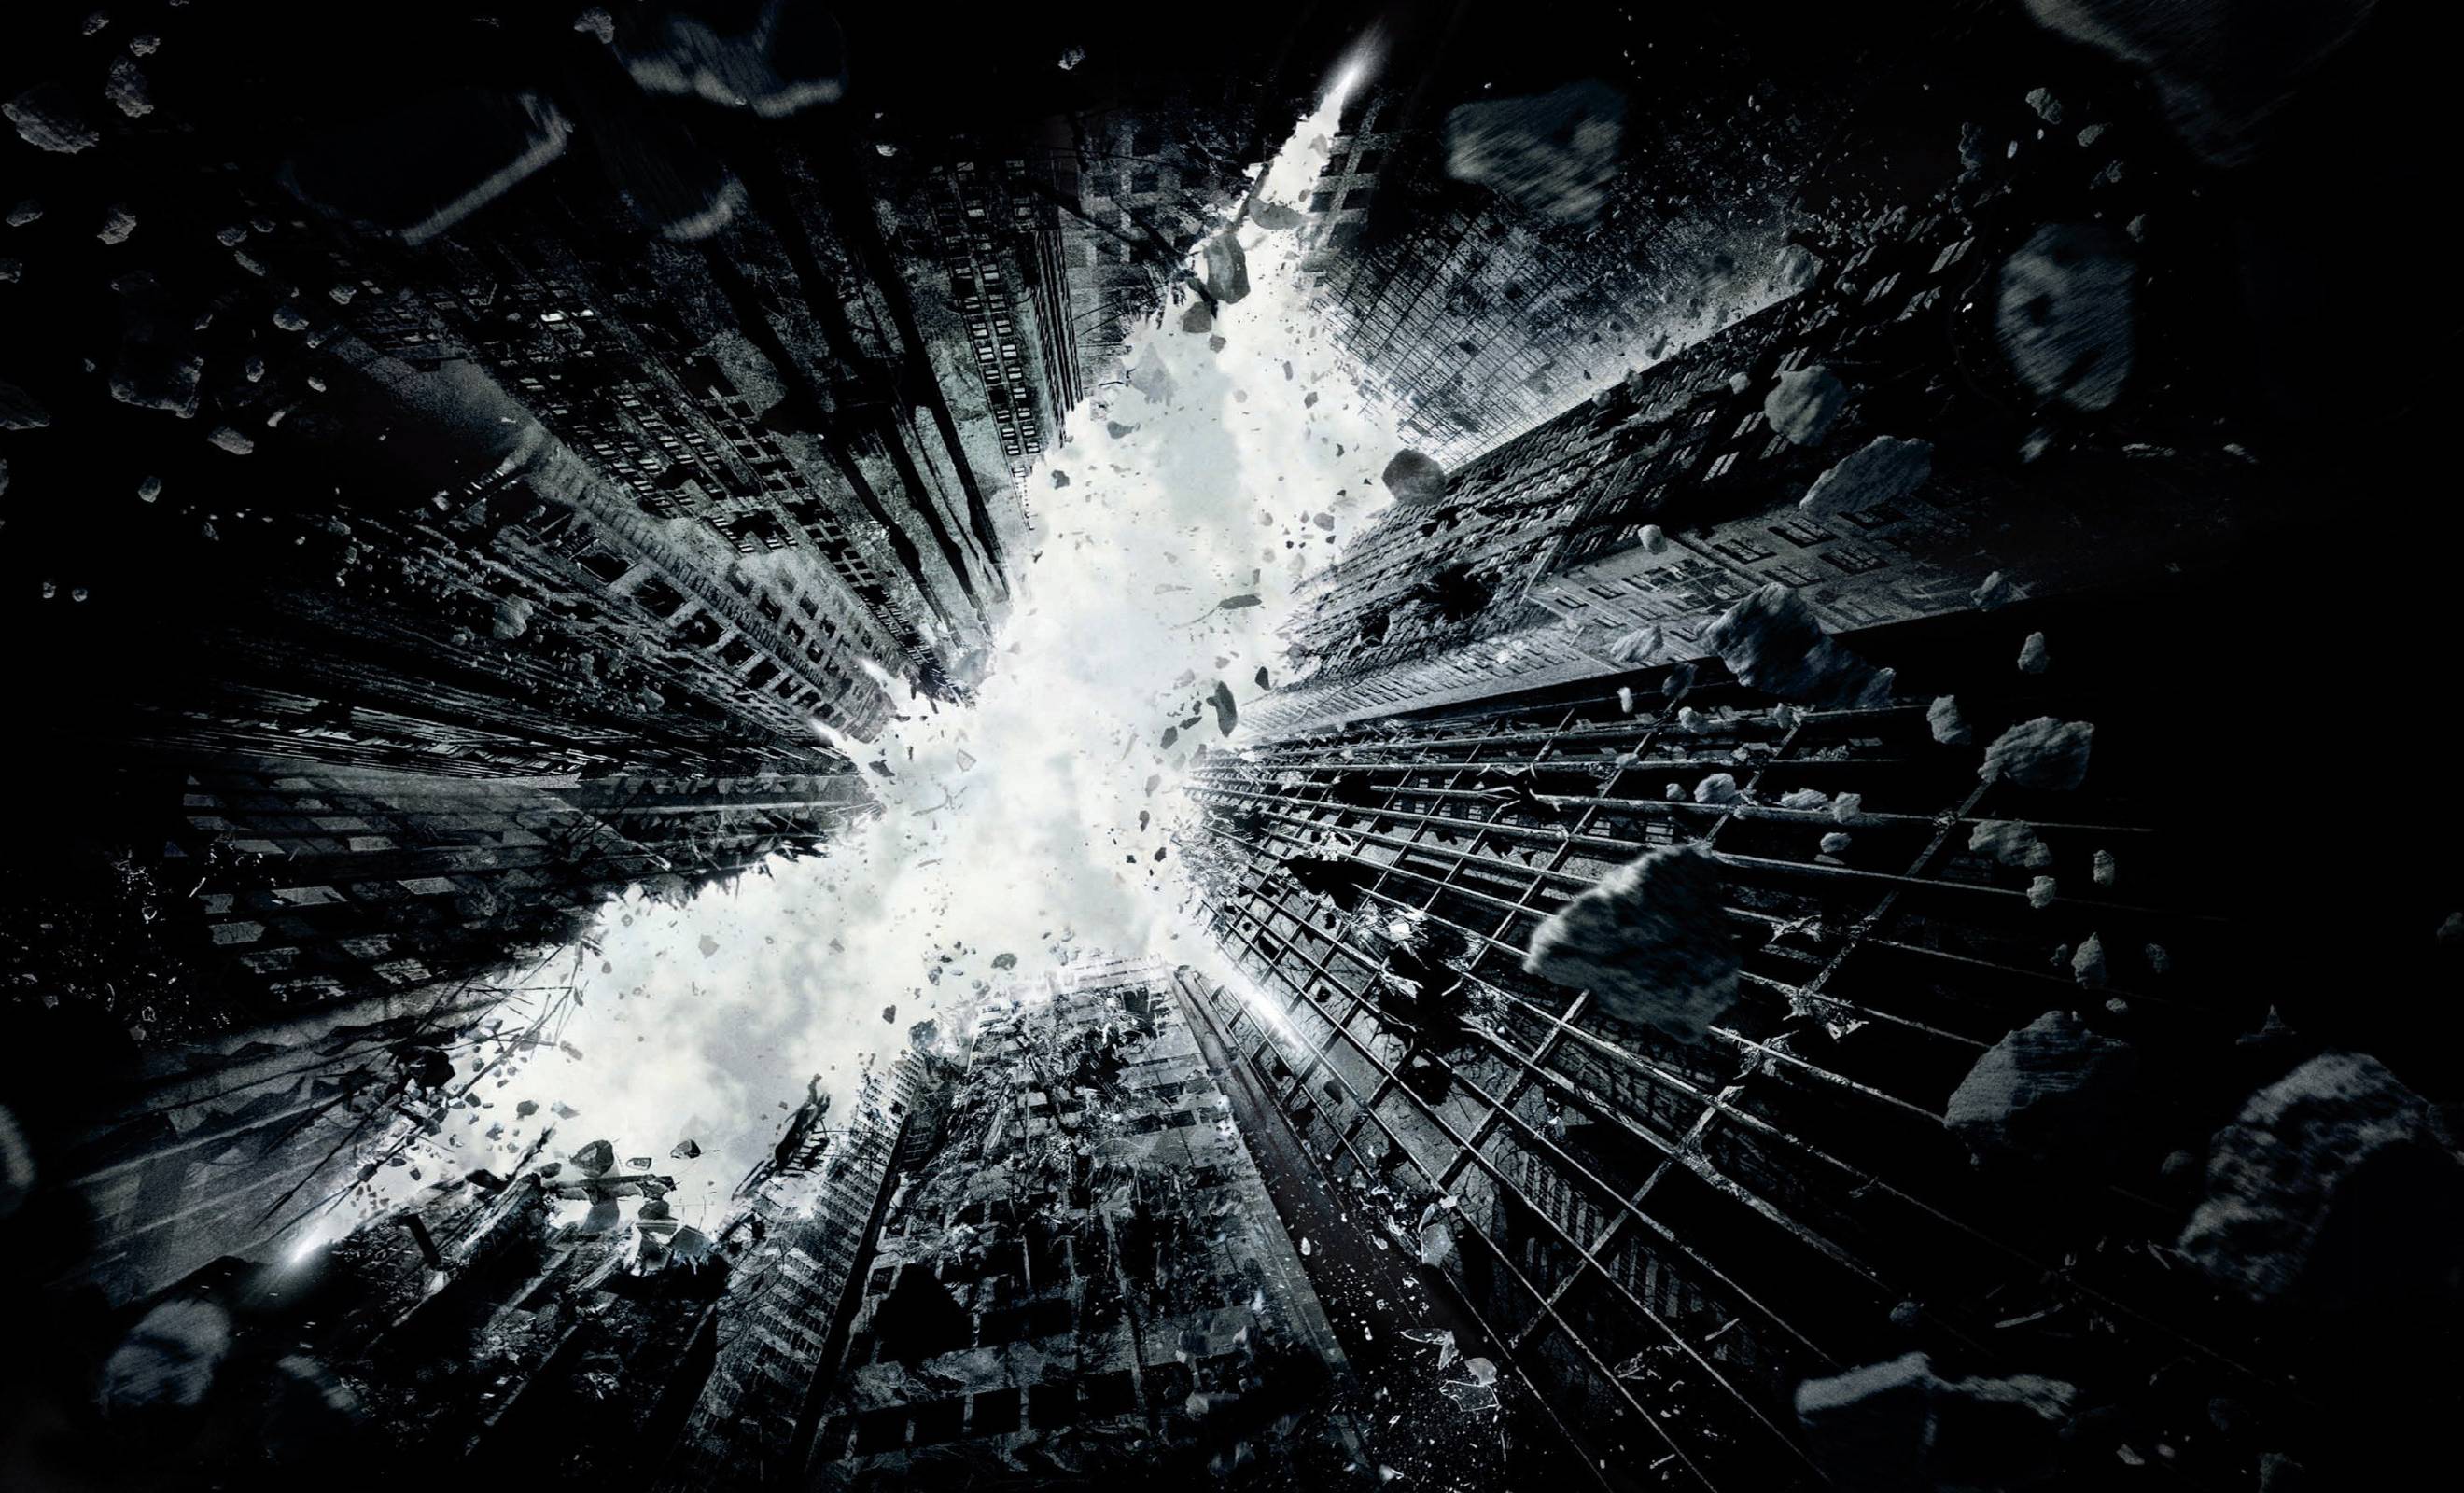 The Dark Knight Rises Wallpaper 2560×1600. Nerdbastards